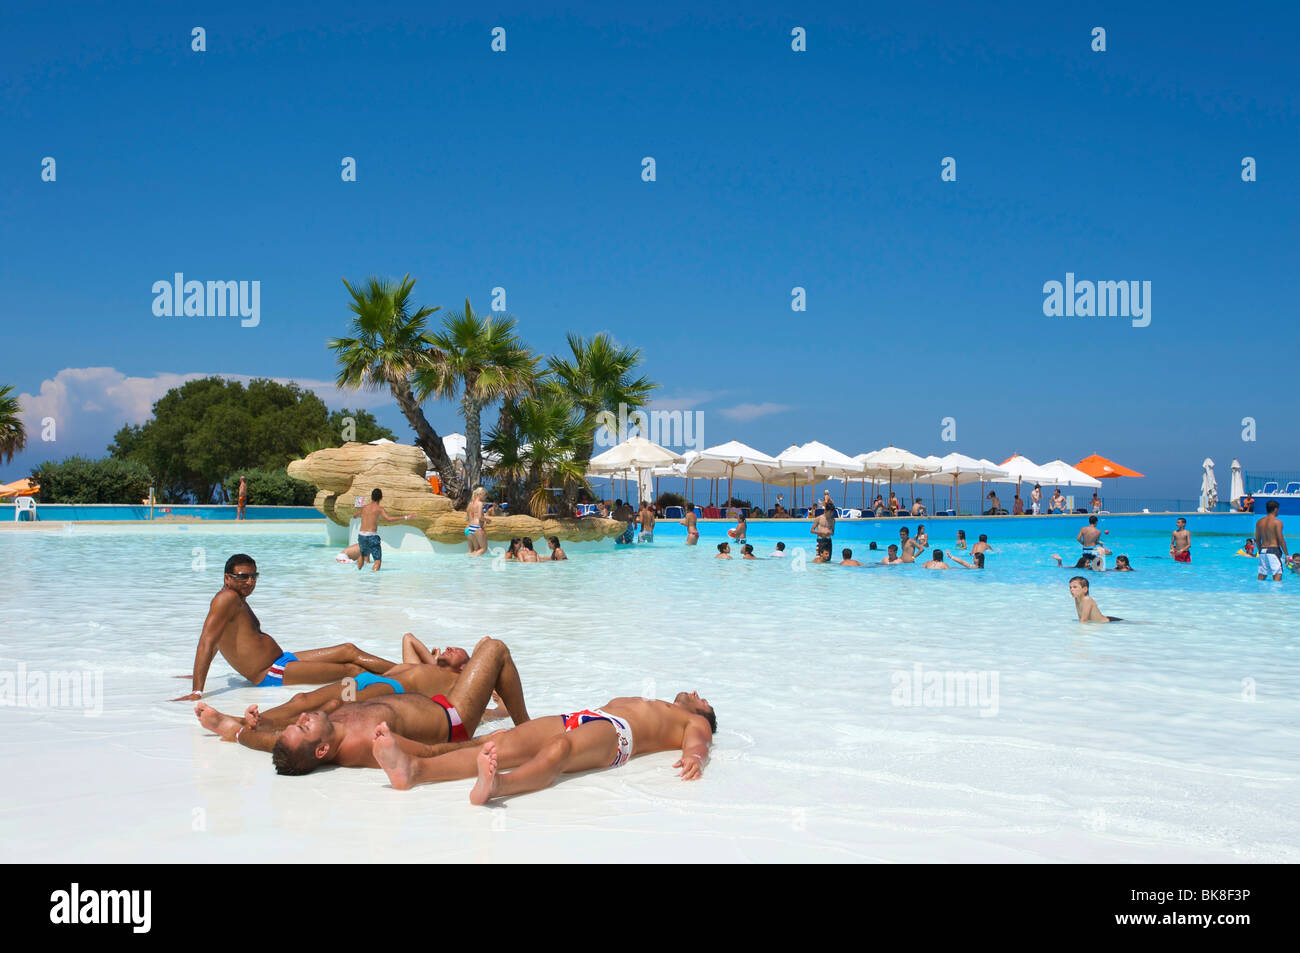 Pool at the Splash and Fun Park, Malta, Europe Stock Photo